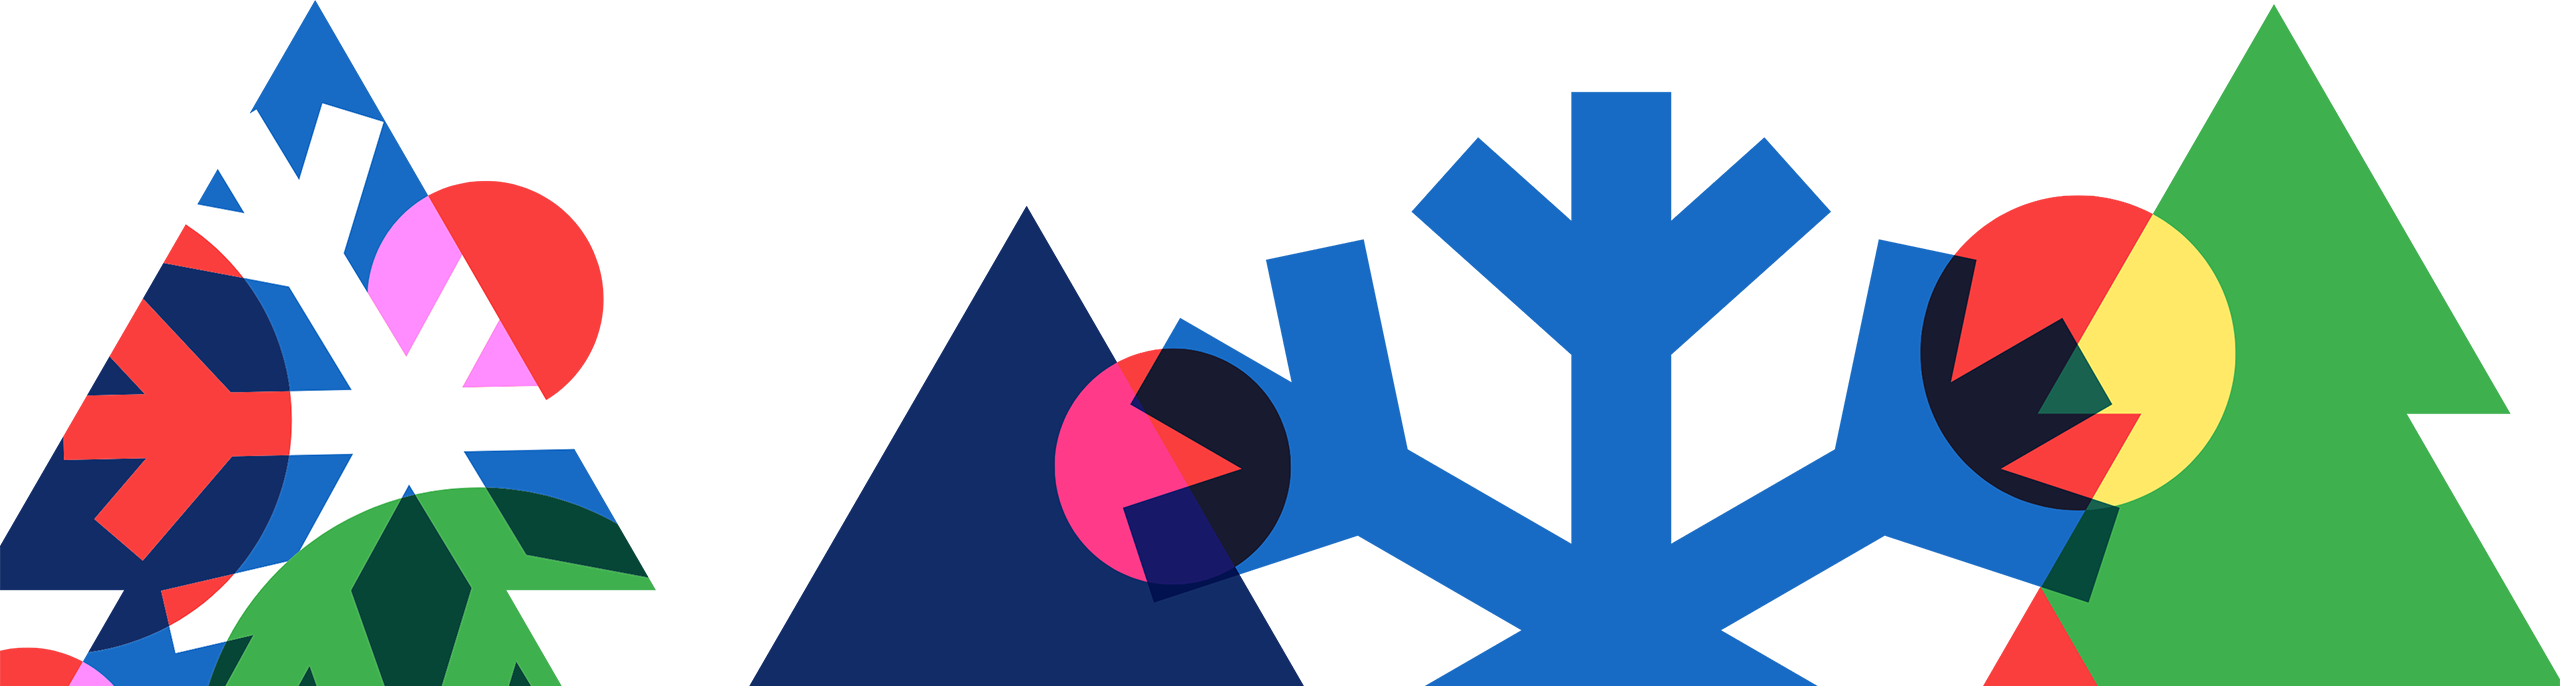 C.O.nxt + Jigsaw logos